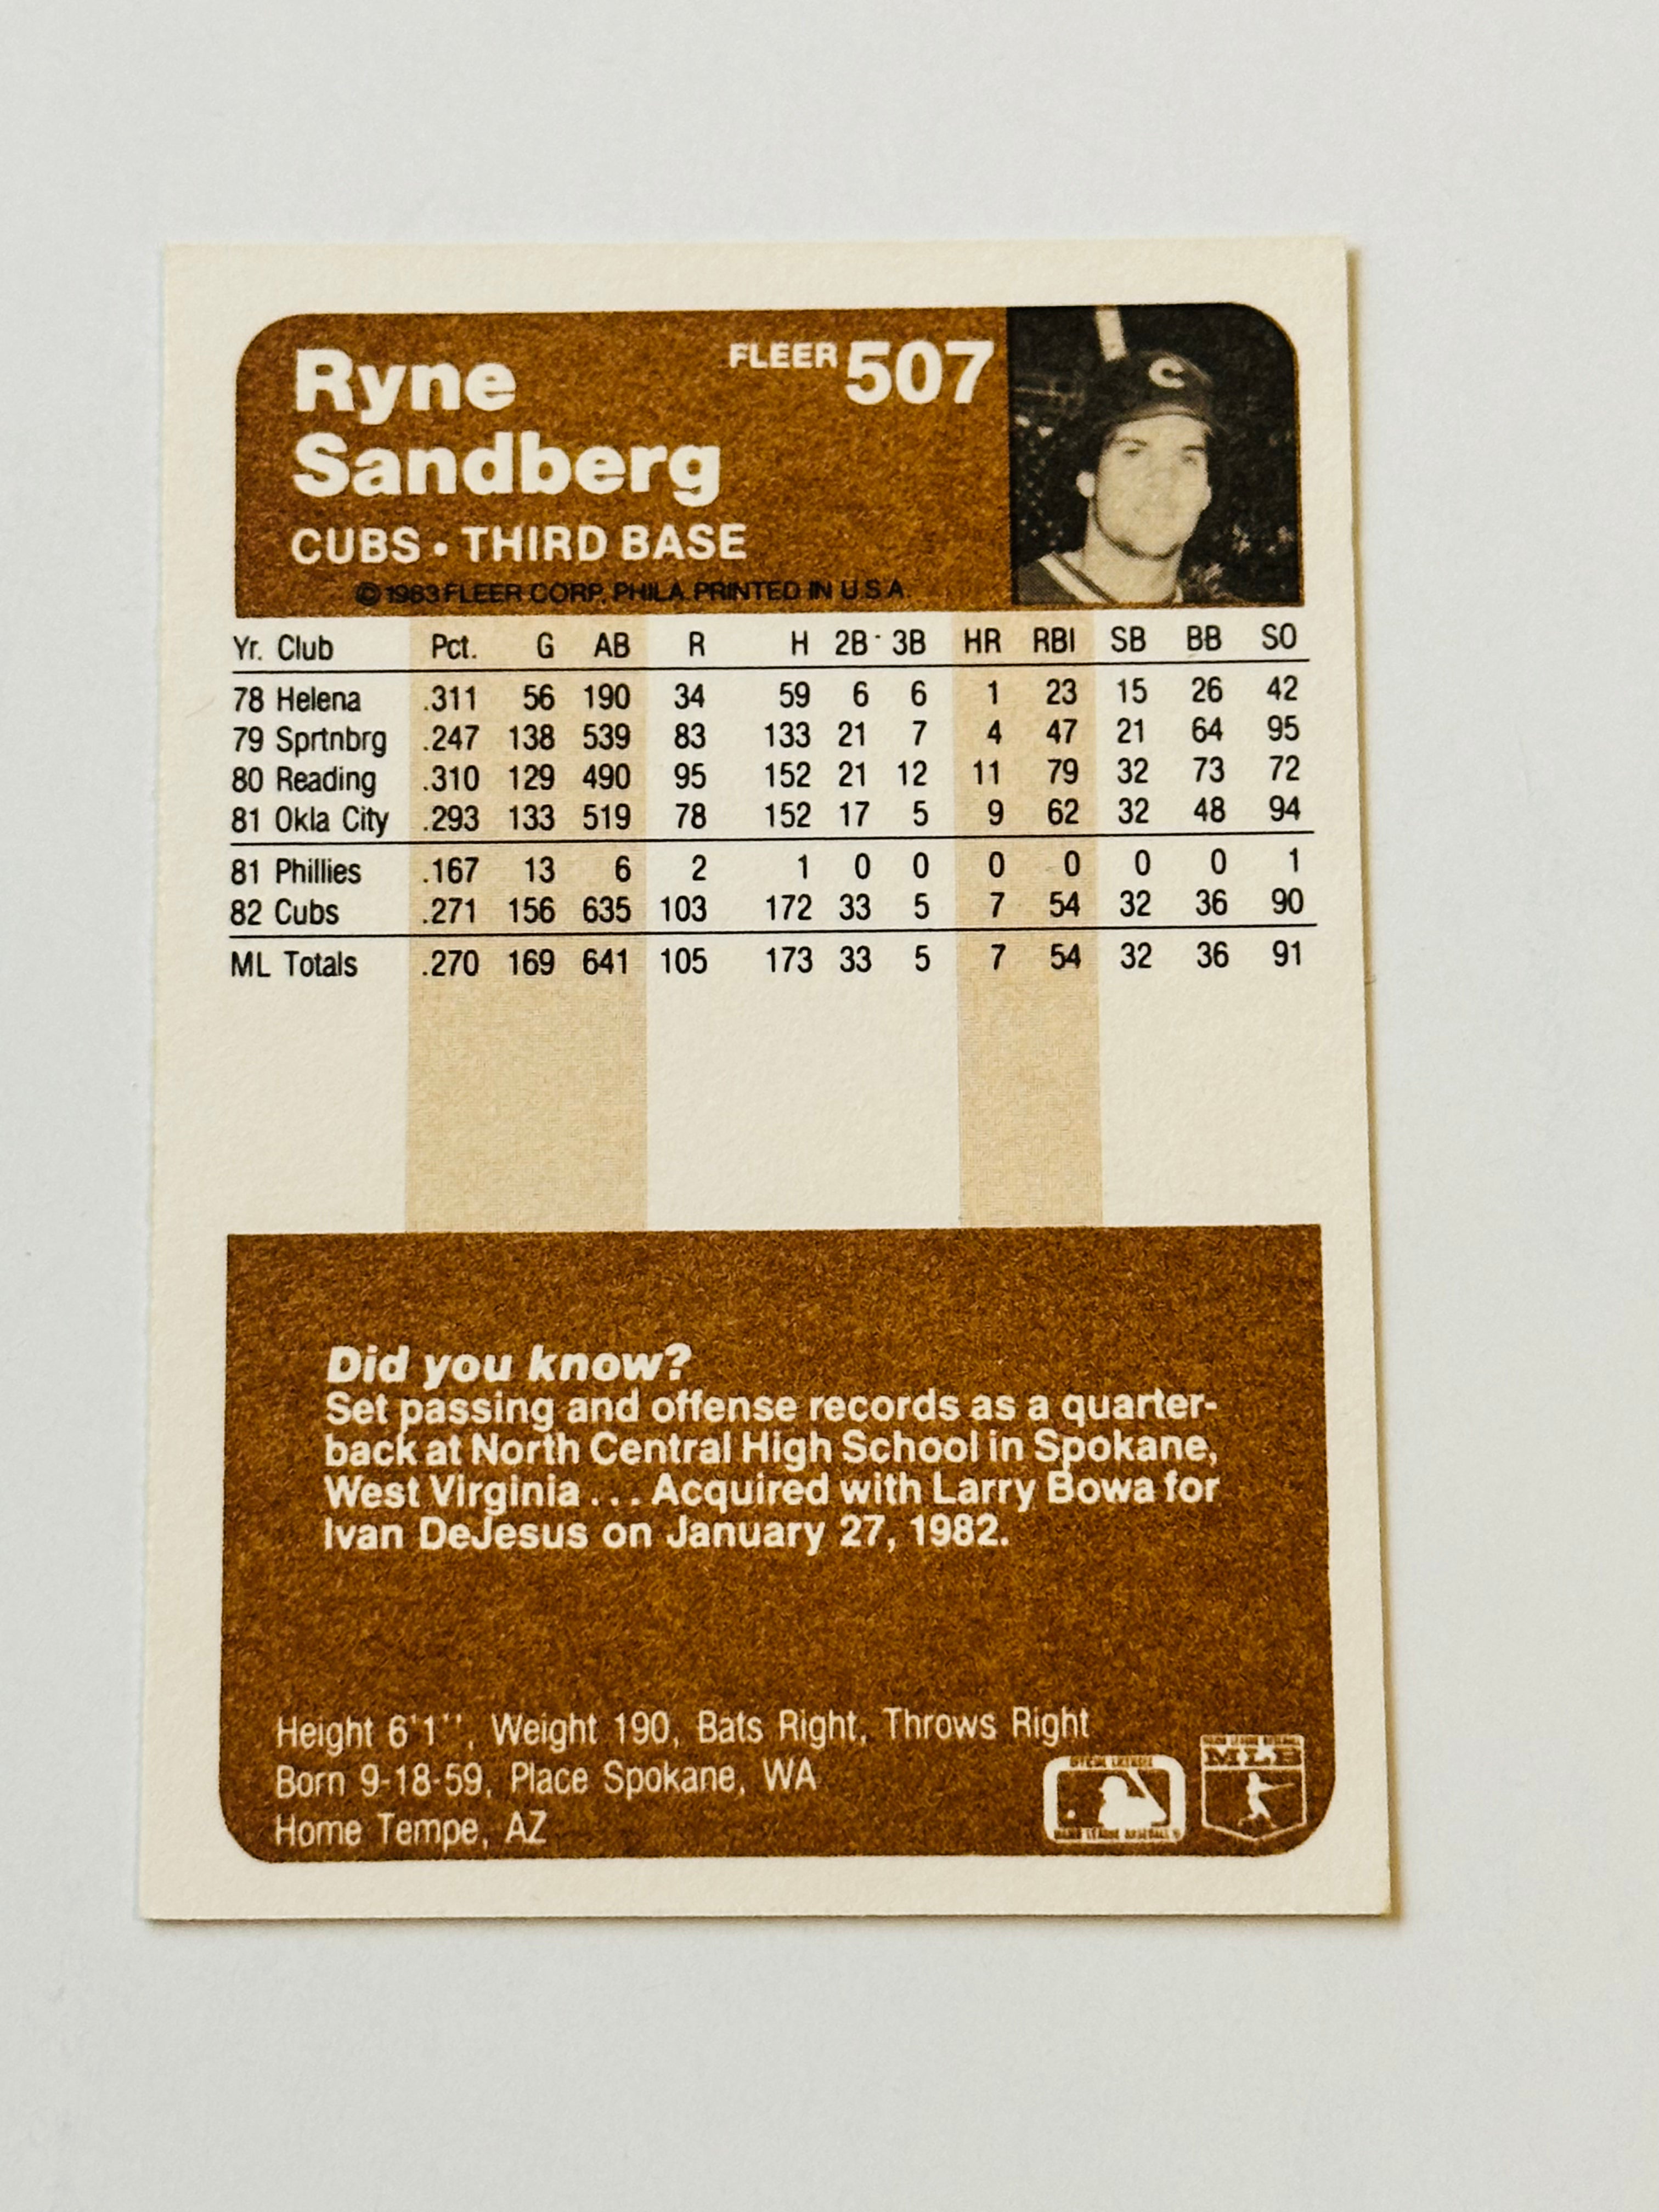 Ryne Sandberg high grade condition Fleer baseball card 1983